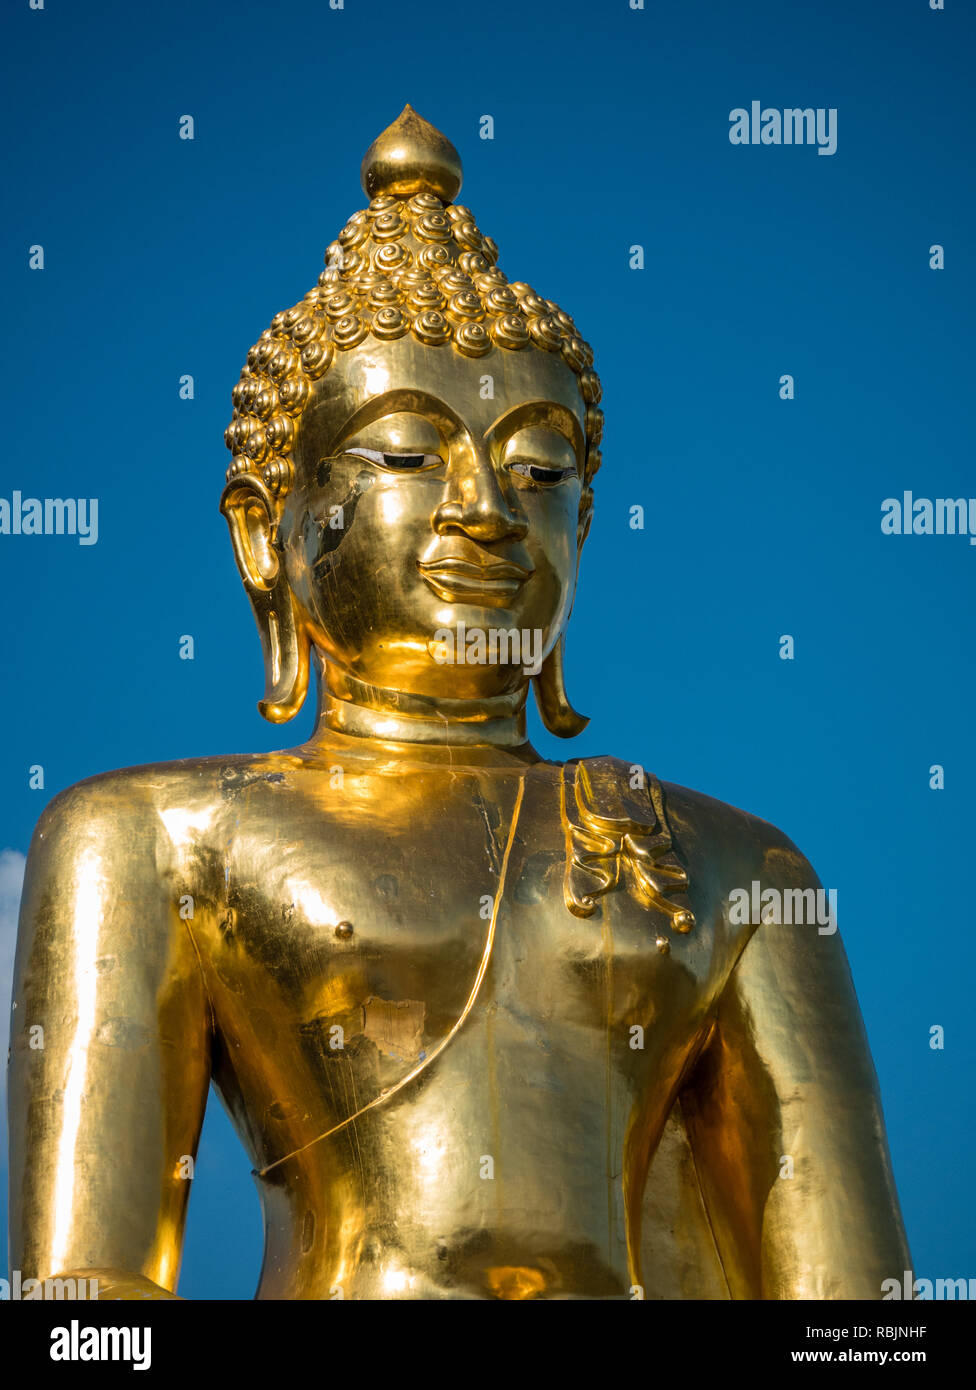 Big Bouddha en or dans le ciel bleu Banque D'Images